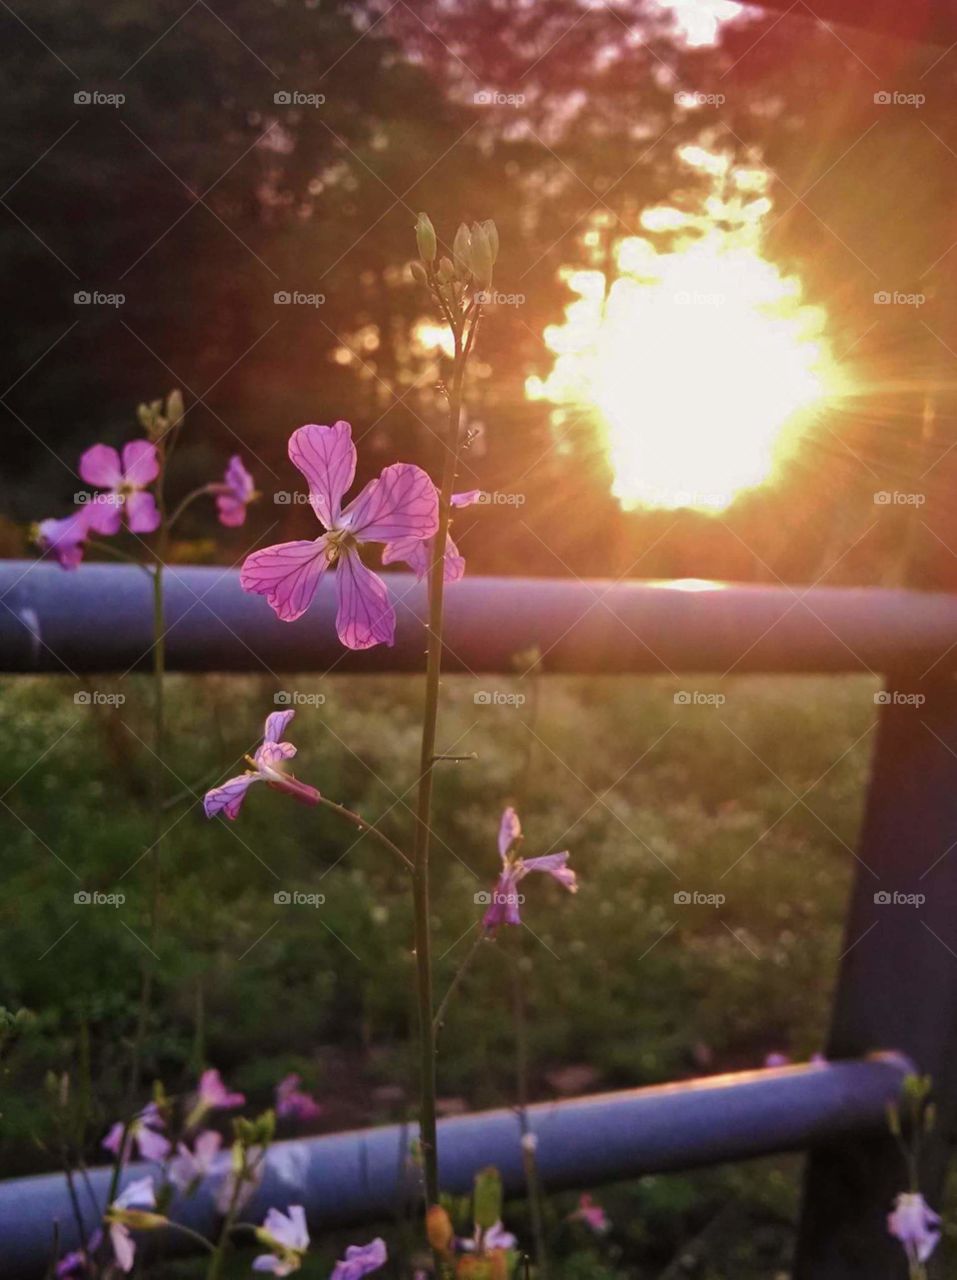 barnyard flowers at sunset